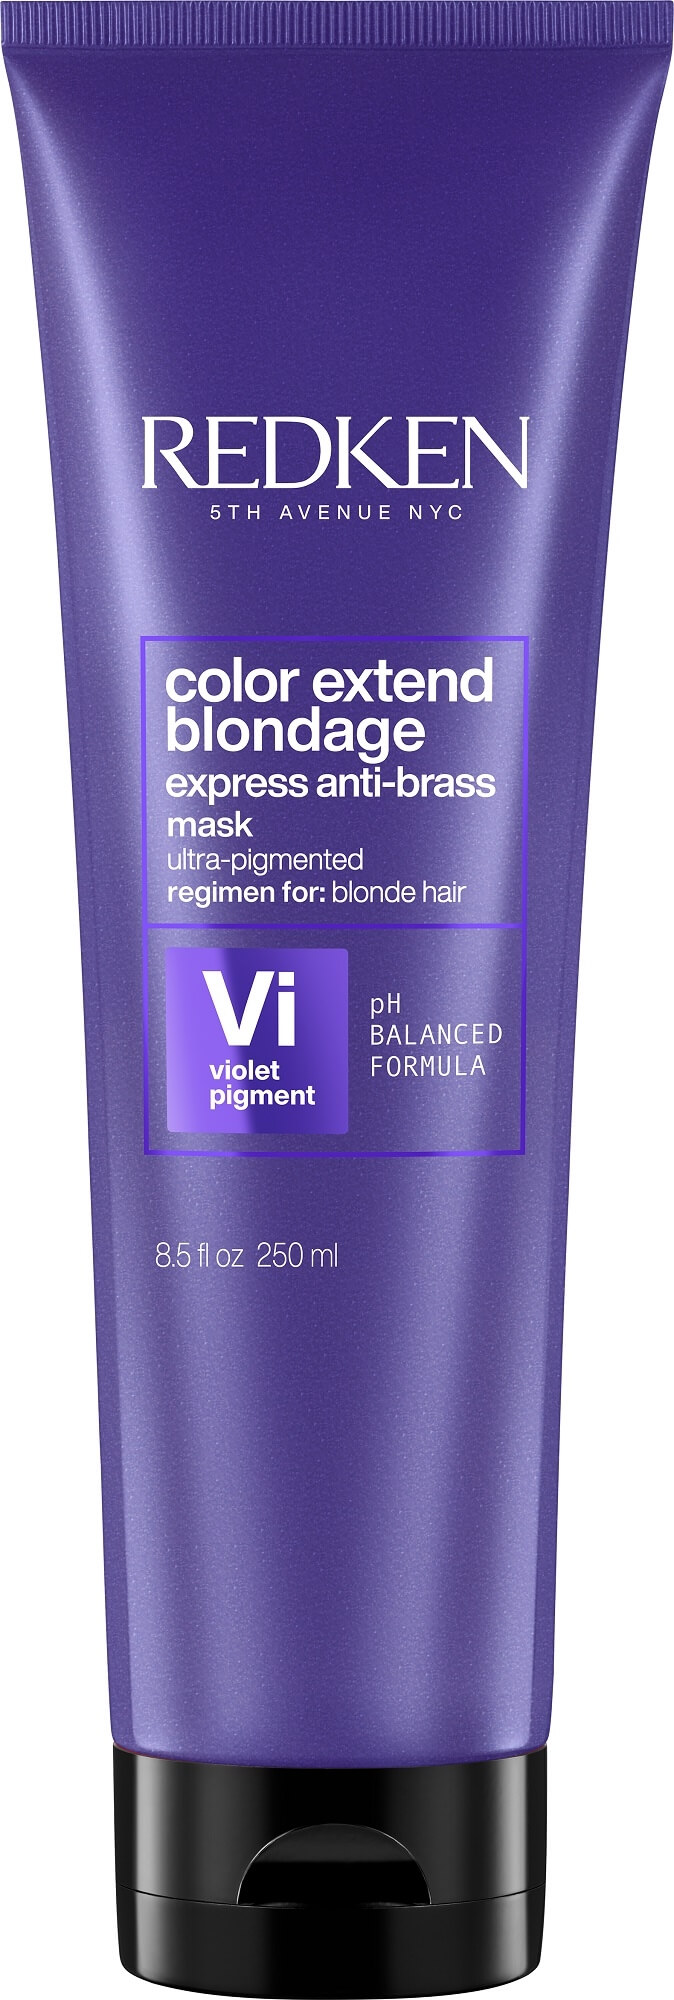 Redken Maska neutralizujúce žlté tóny vlasov Color Extend Blondage (Express Anti-brass Purple Mask) 250 ml